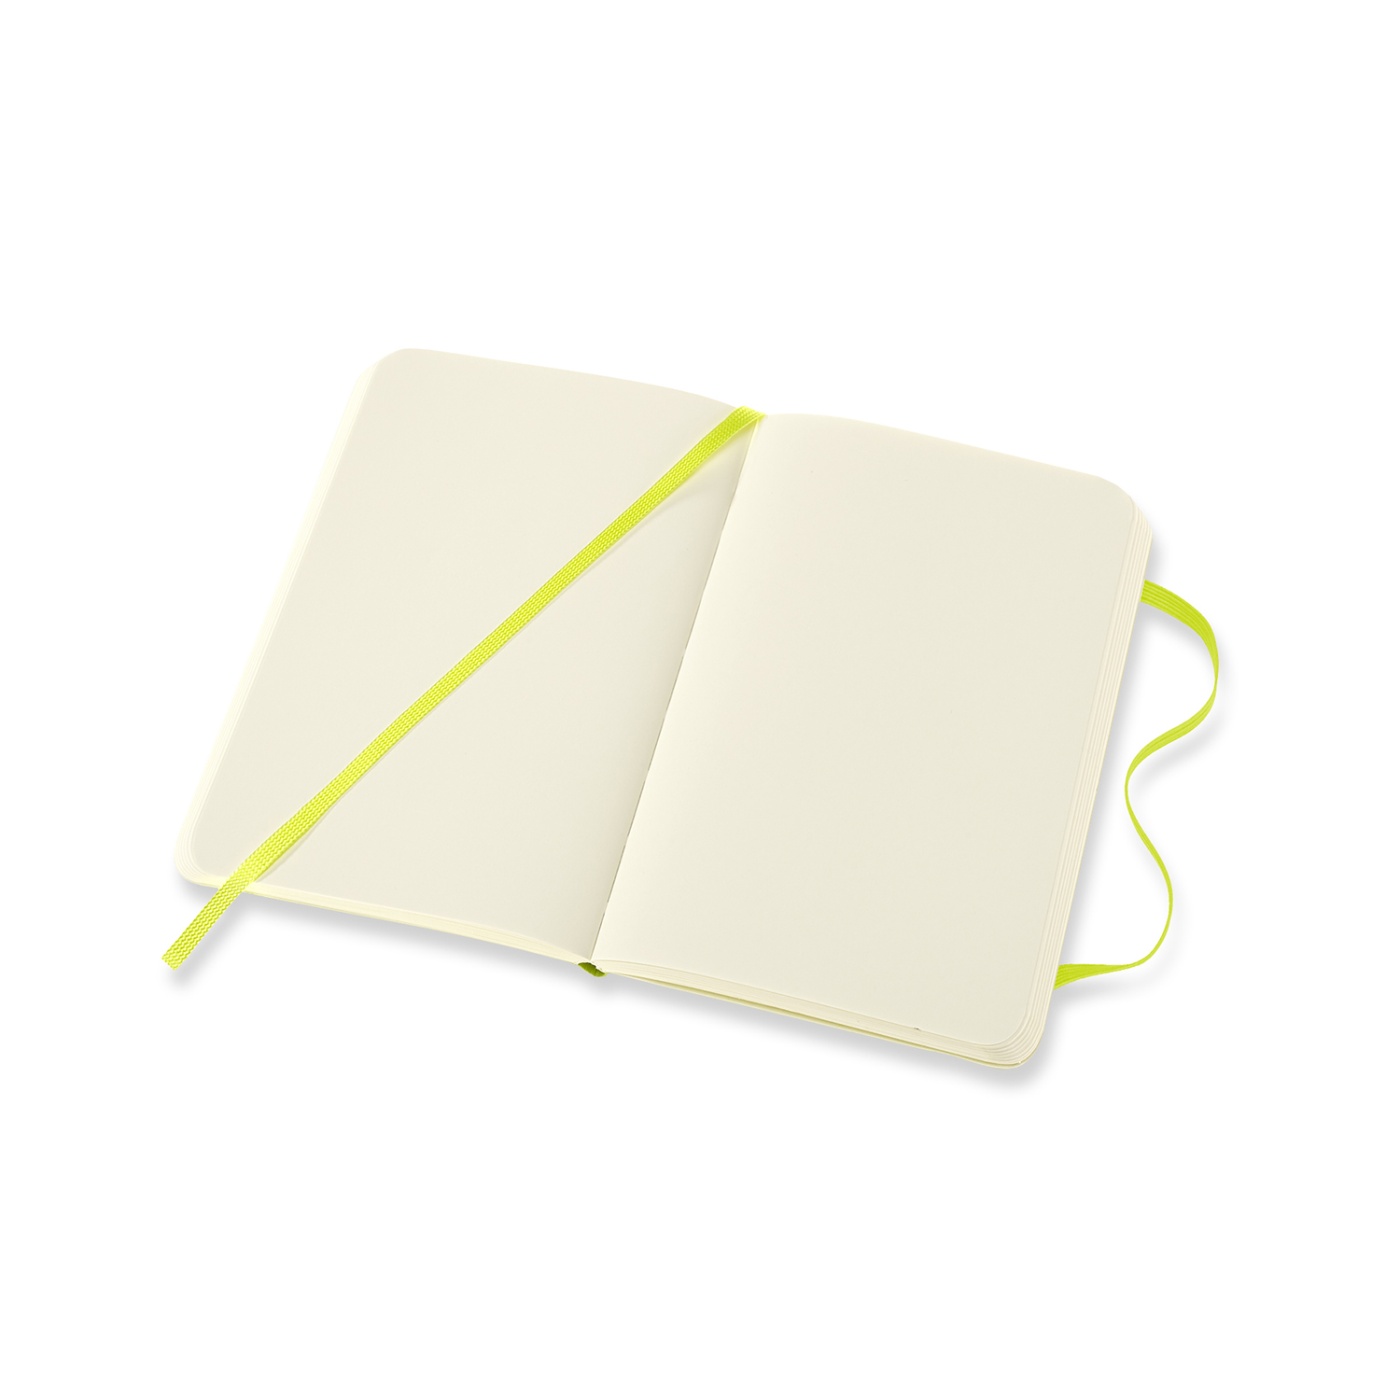 Classic Soft Cover Pocket Lemon Green i gruppen Papir & Blok / Skriv og noter / Notesbøger hos Voorcrea (100422_r)